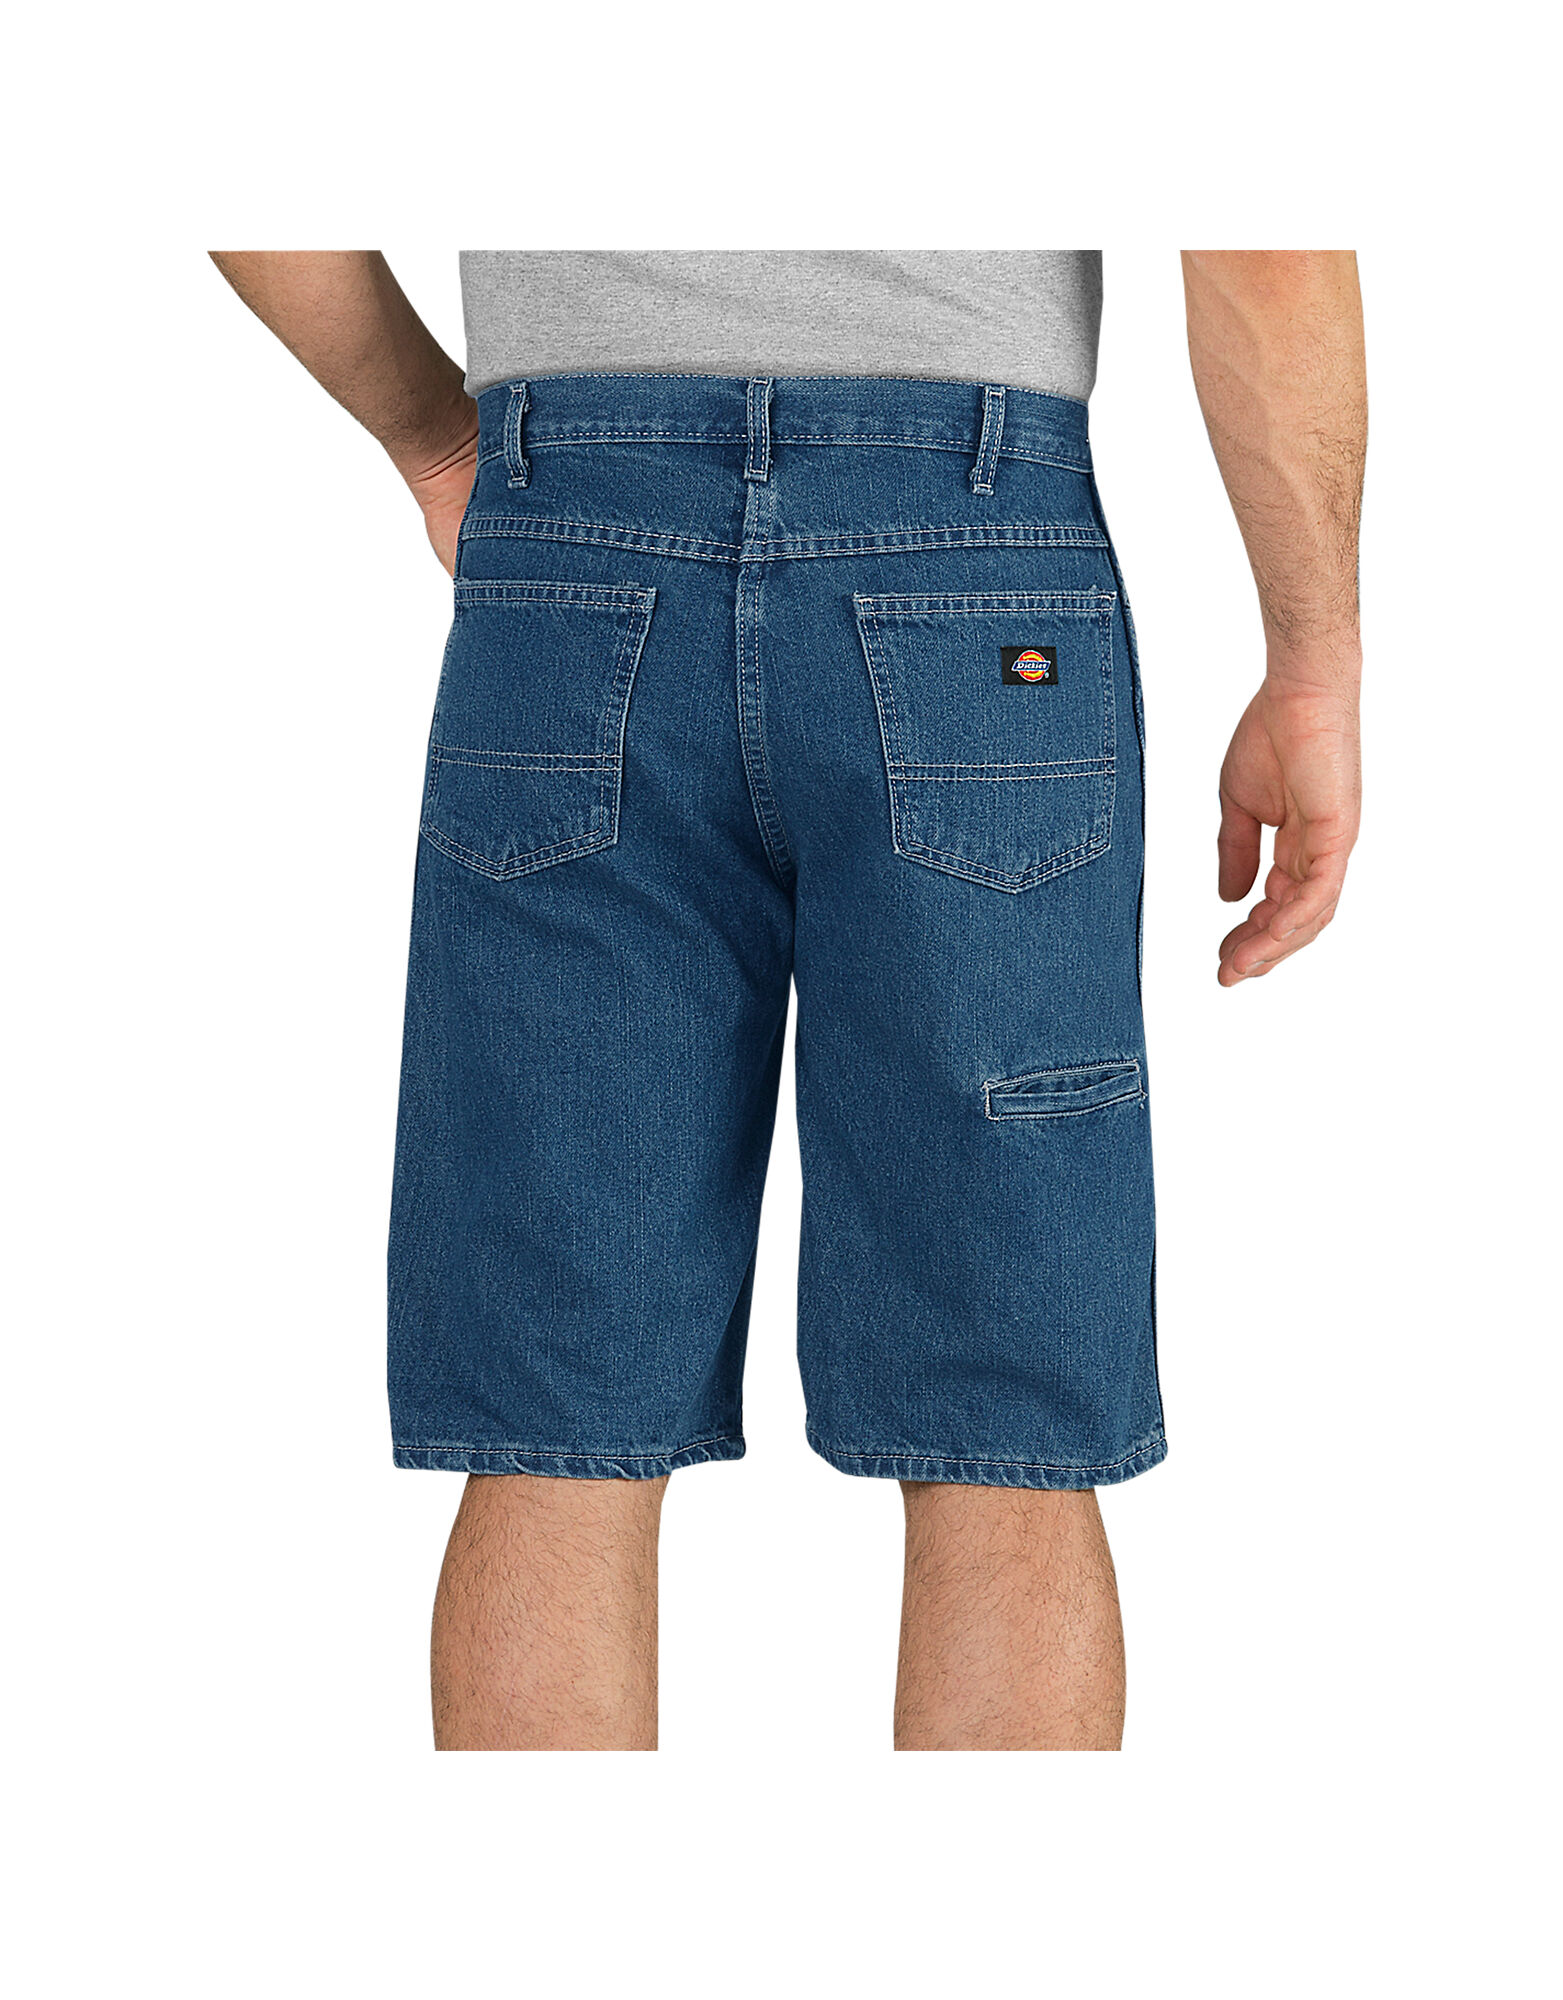 dickies jean shorts mens